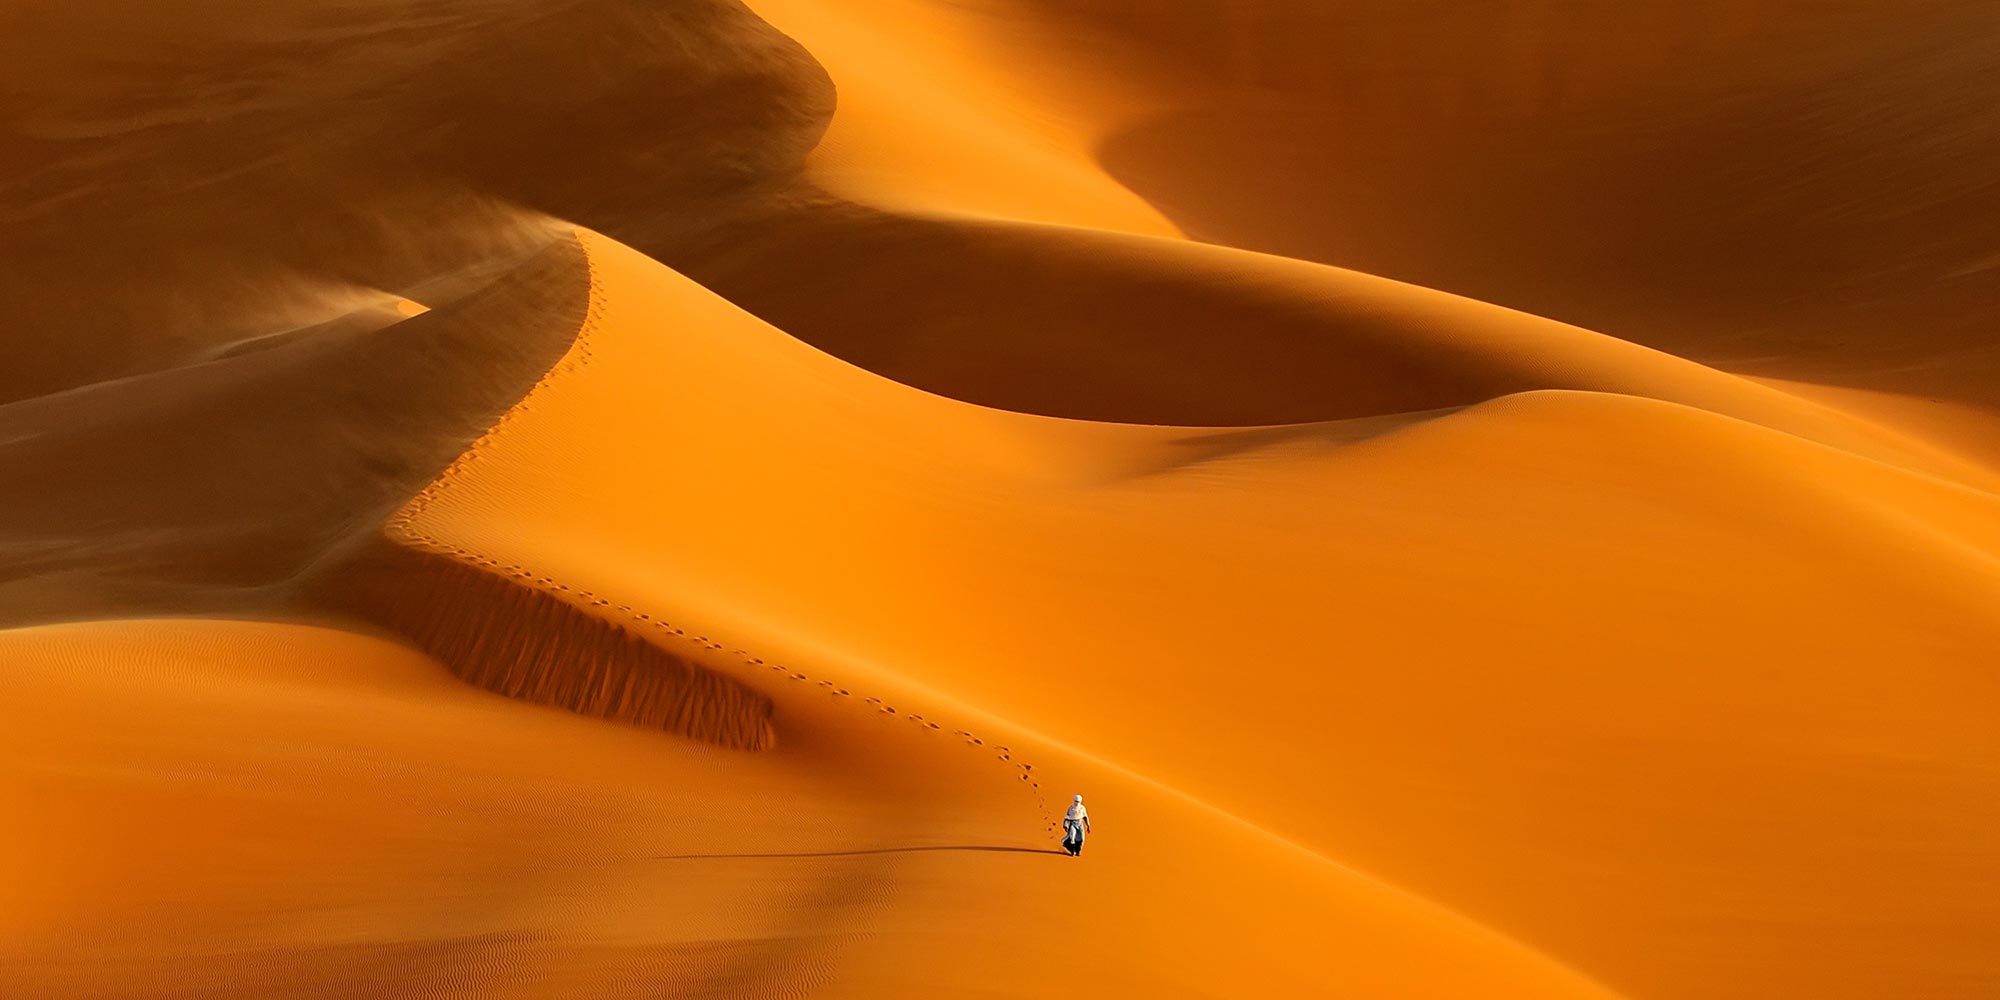 The Lone Tuareg by Marsel Van Oosten